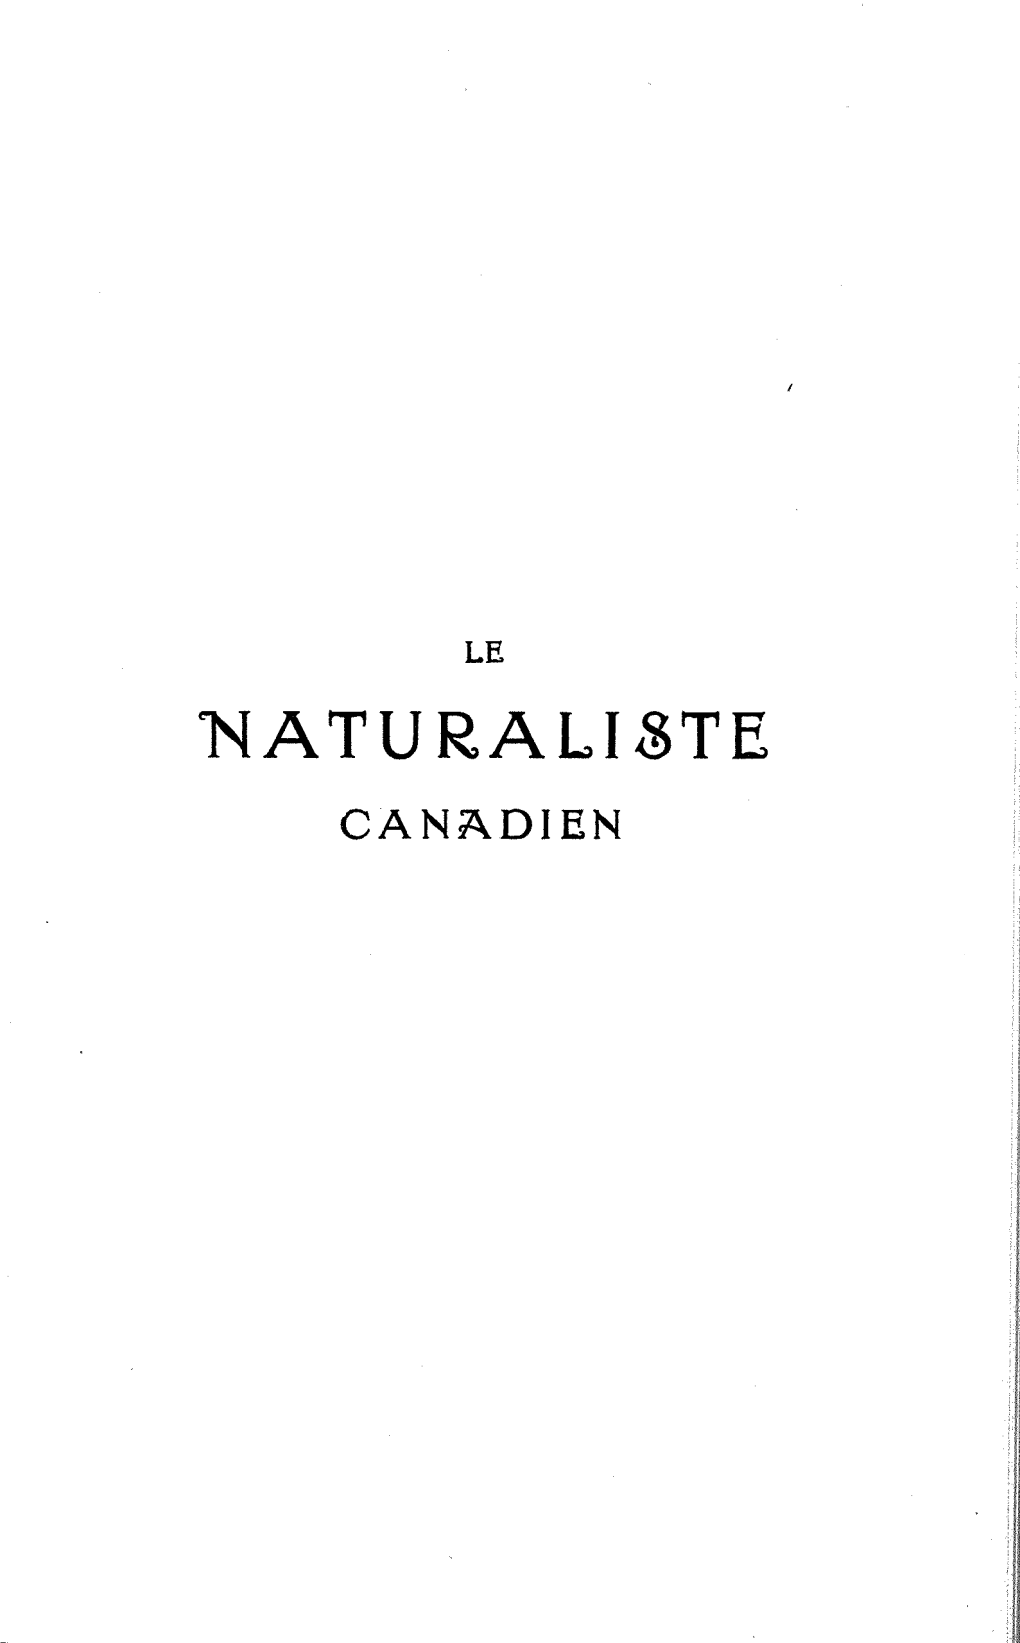 Enaturaliste CANADIEN